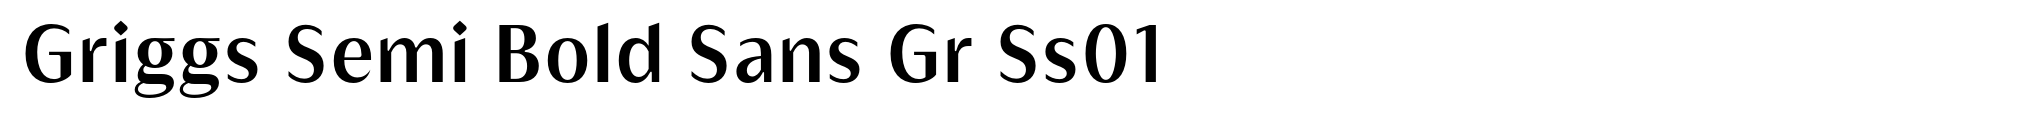 Griggs Semi Bold Sans Gr Ss01 image